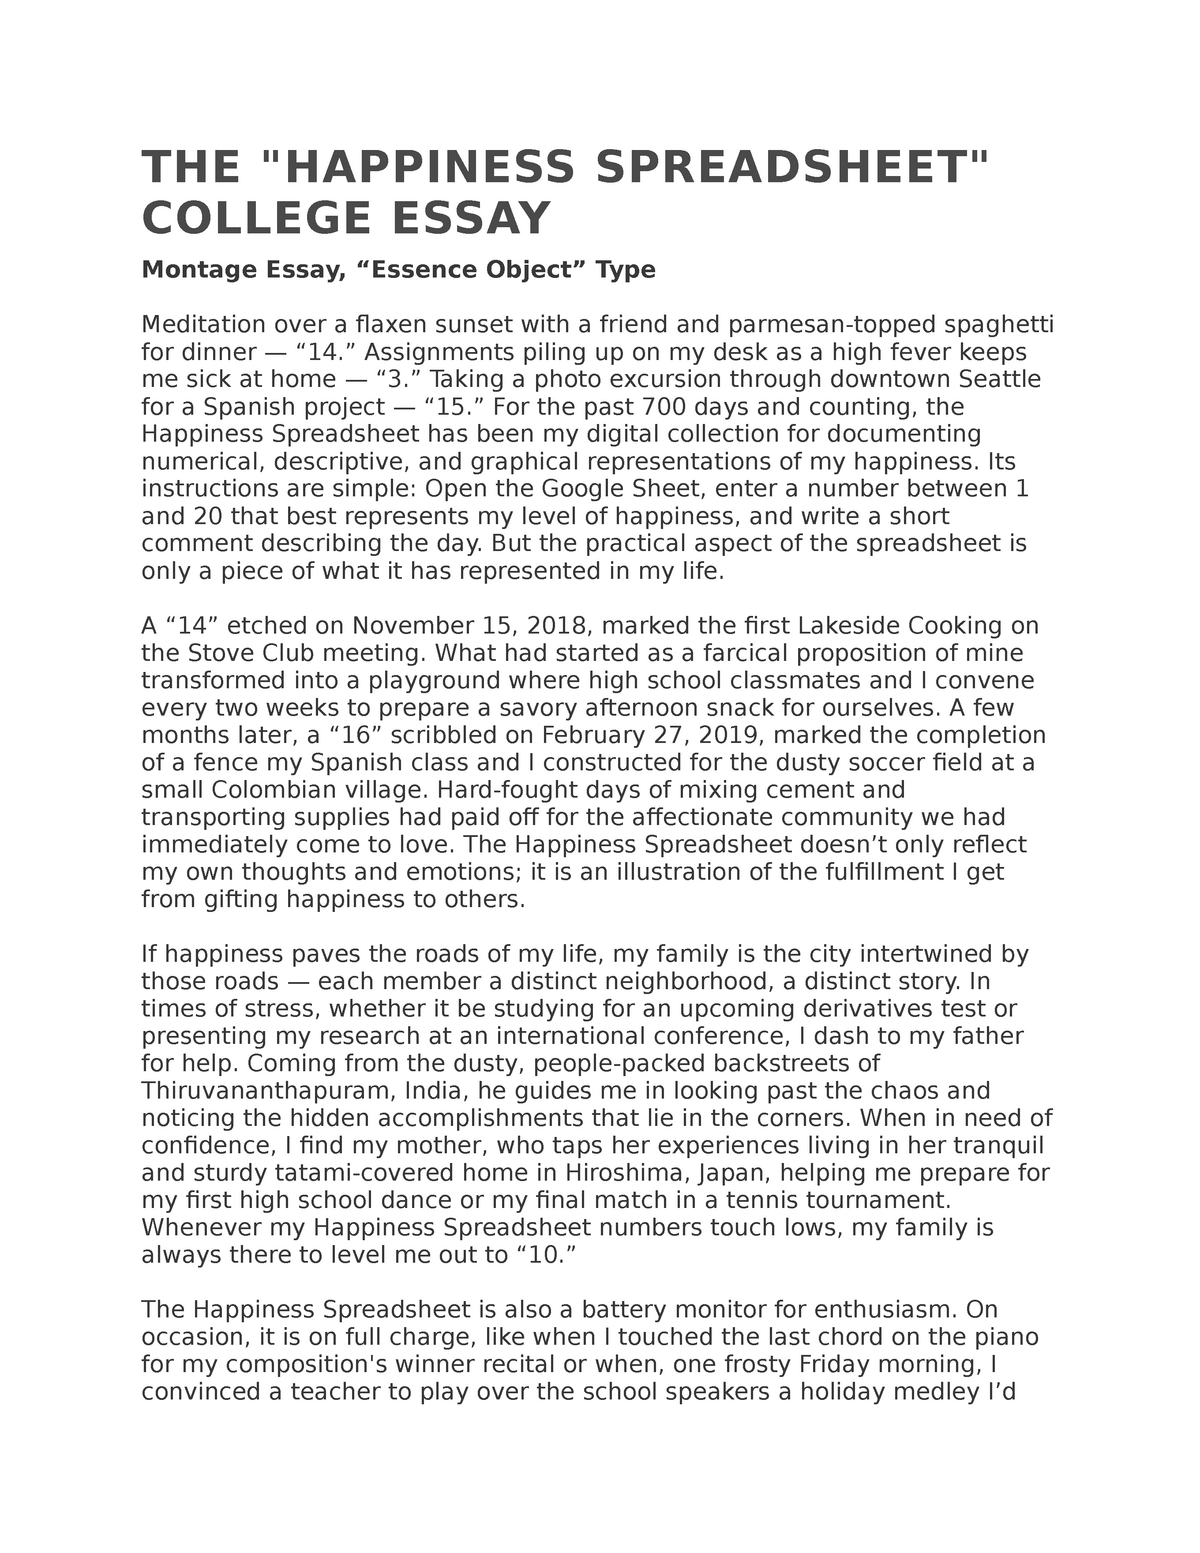 montage essay examples college essay guy